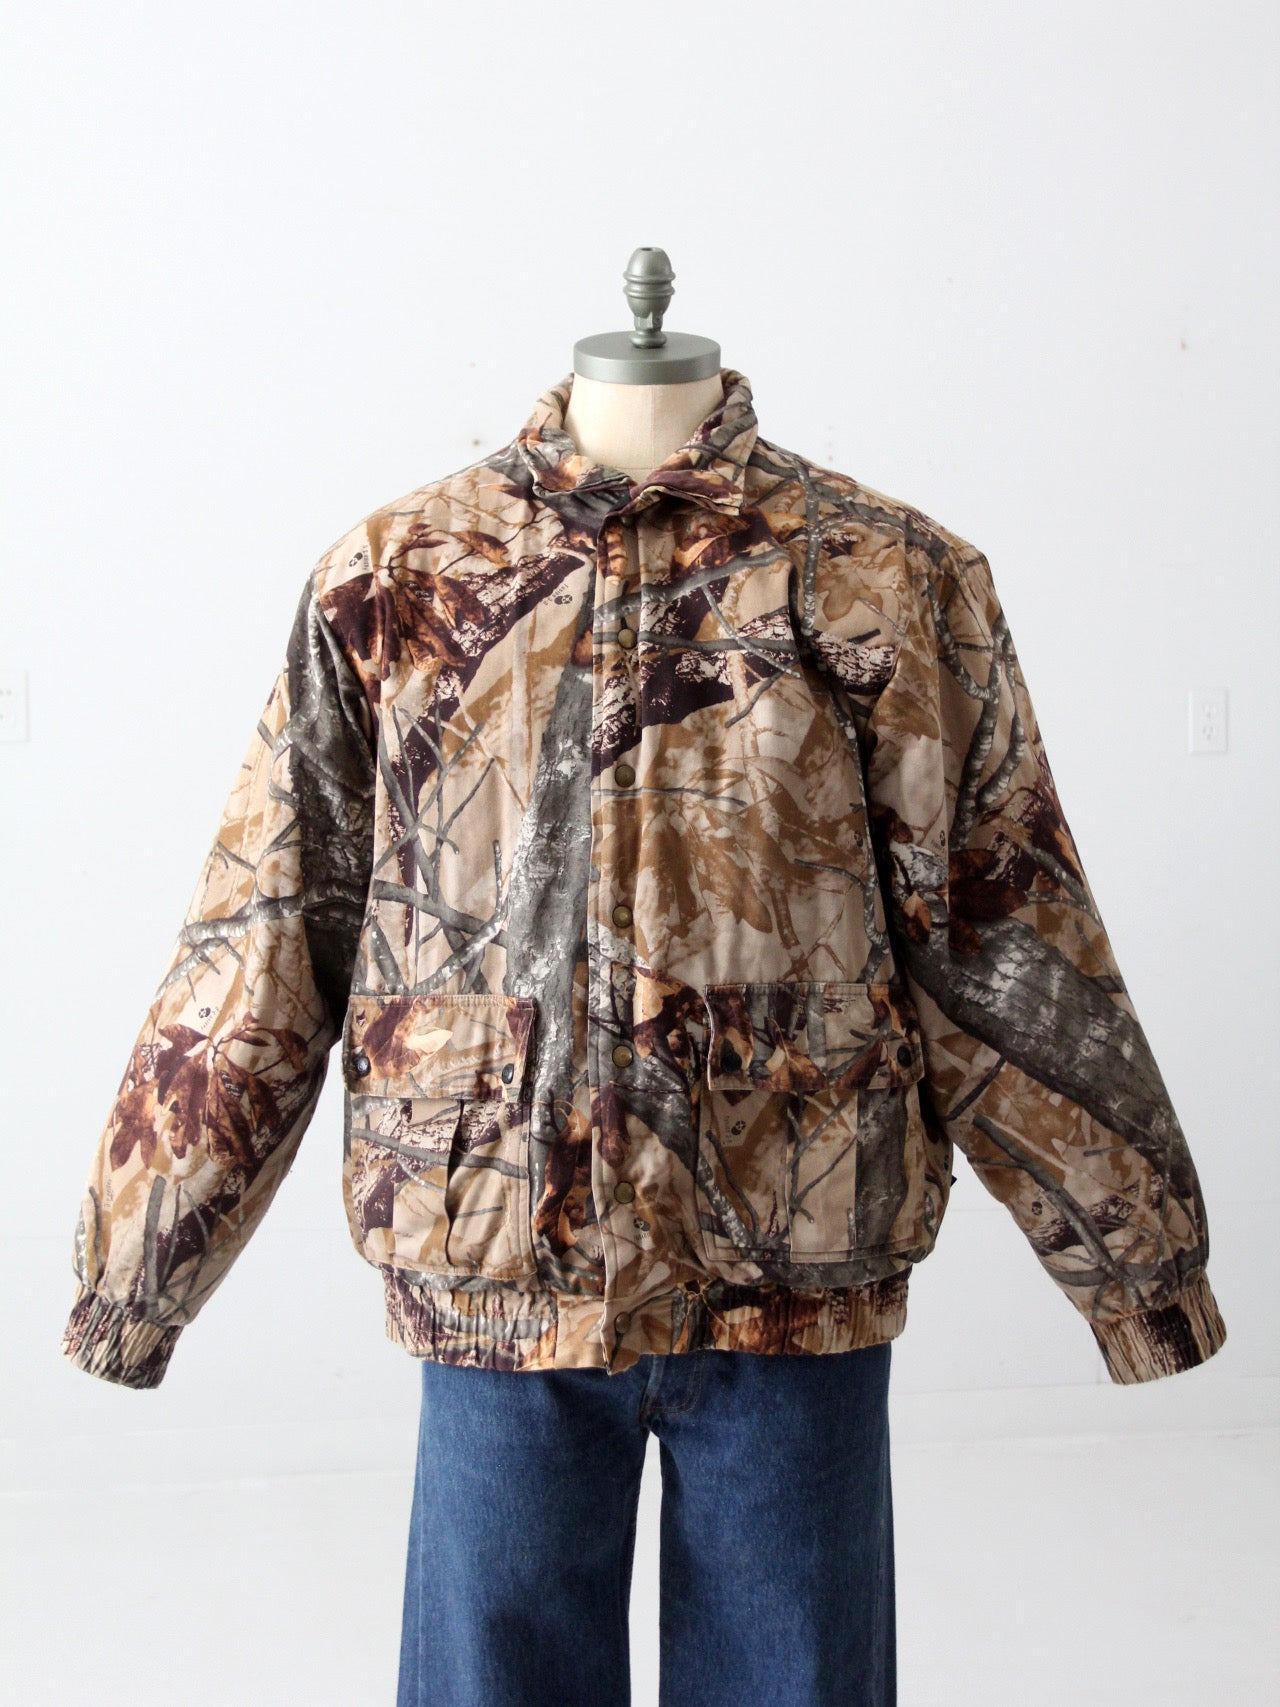 Outfitters Ridge Fusion 3D Camo Hunting Jacket Mens M (38-40) Detachable  Hood 